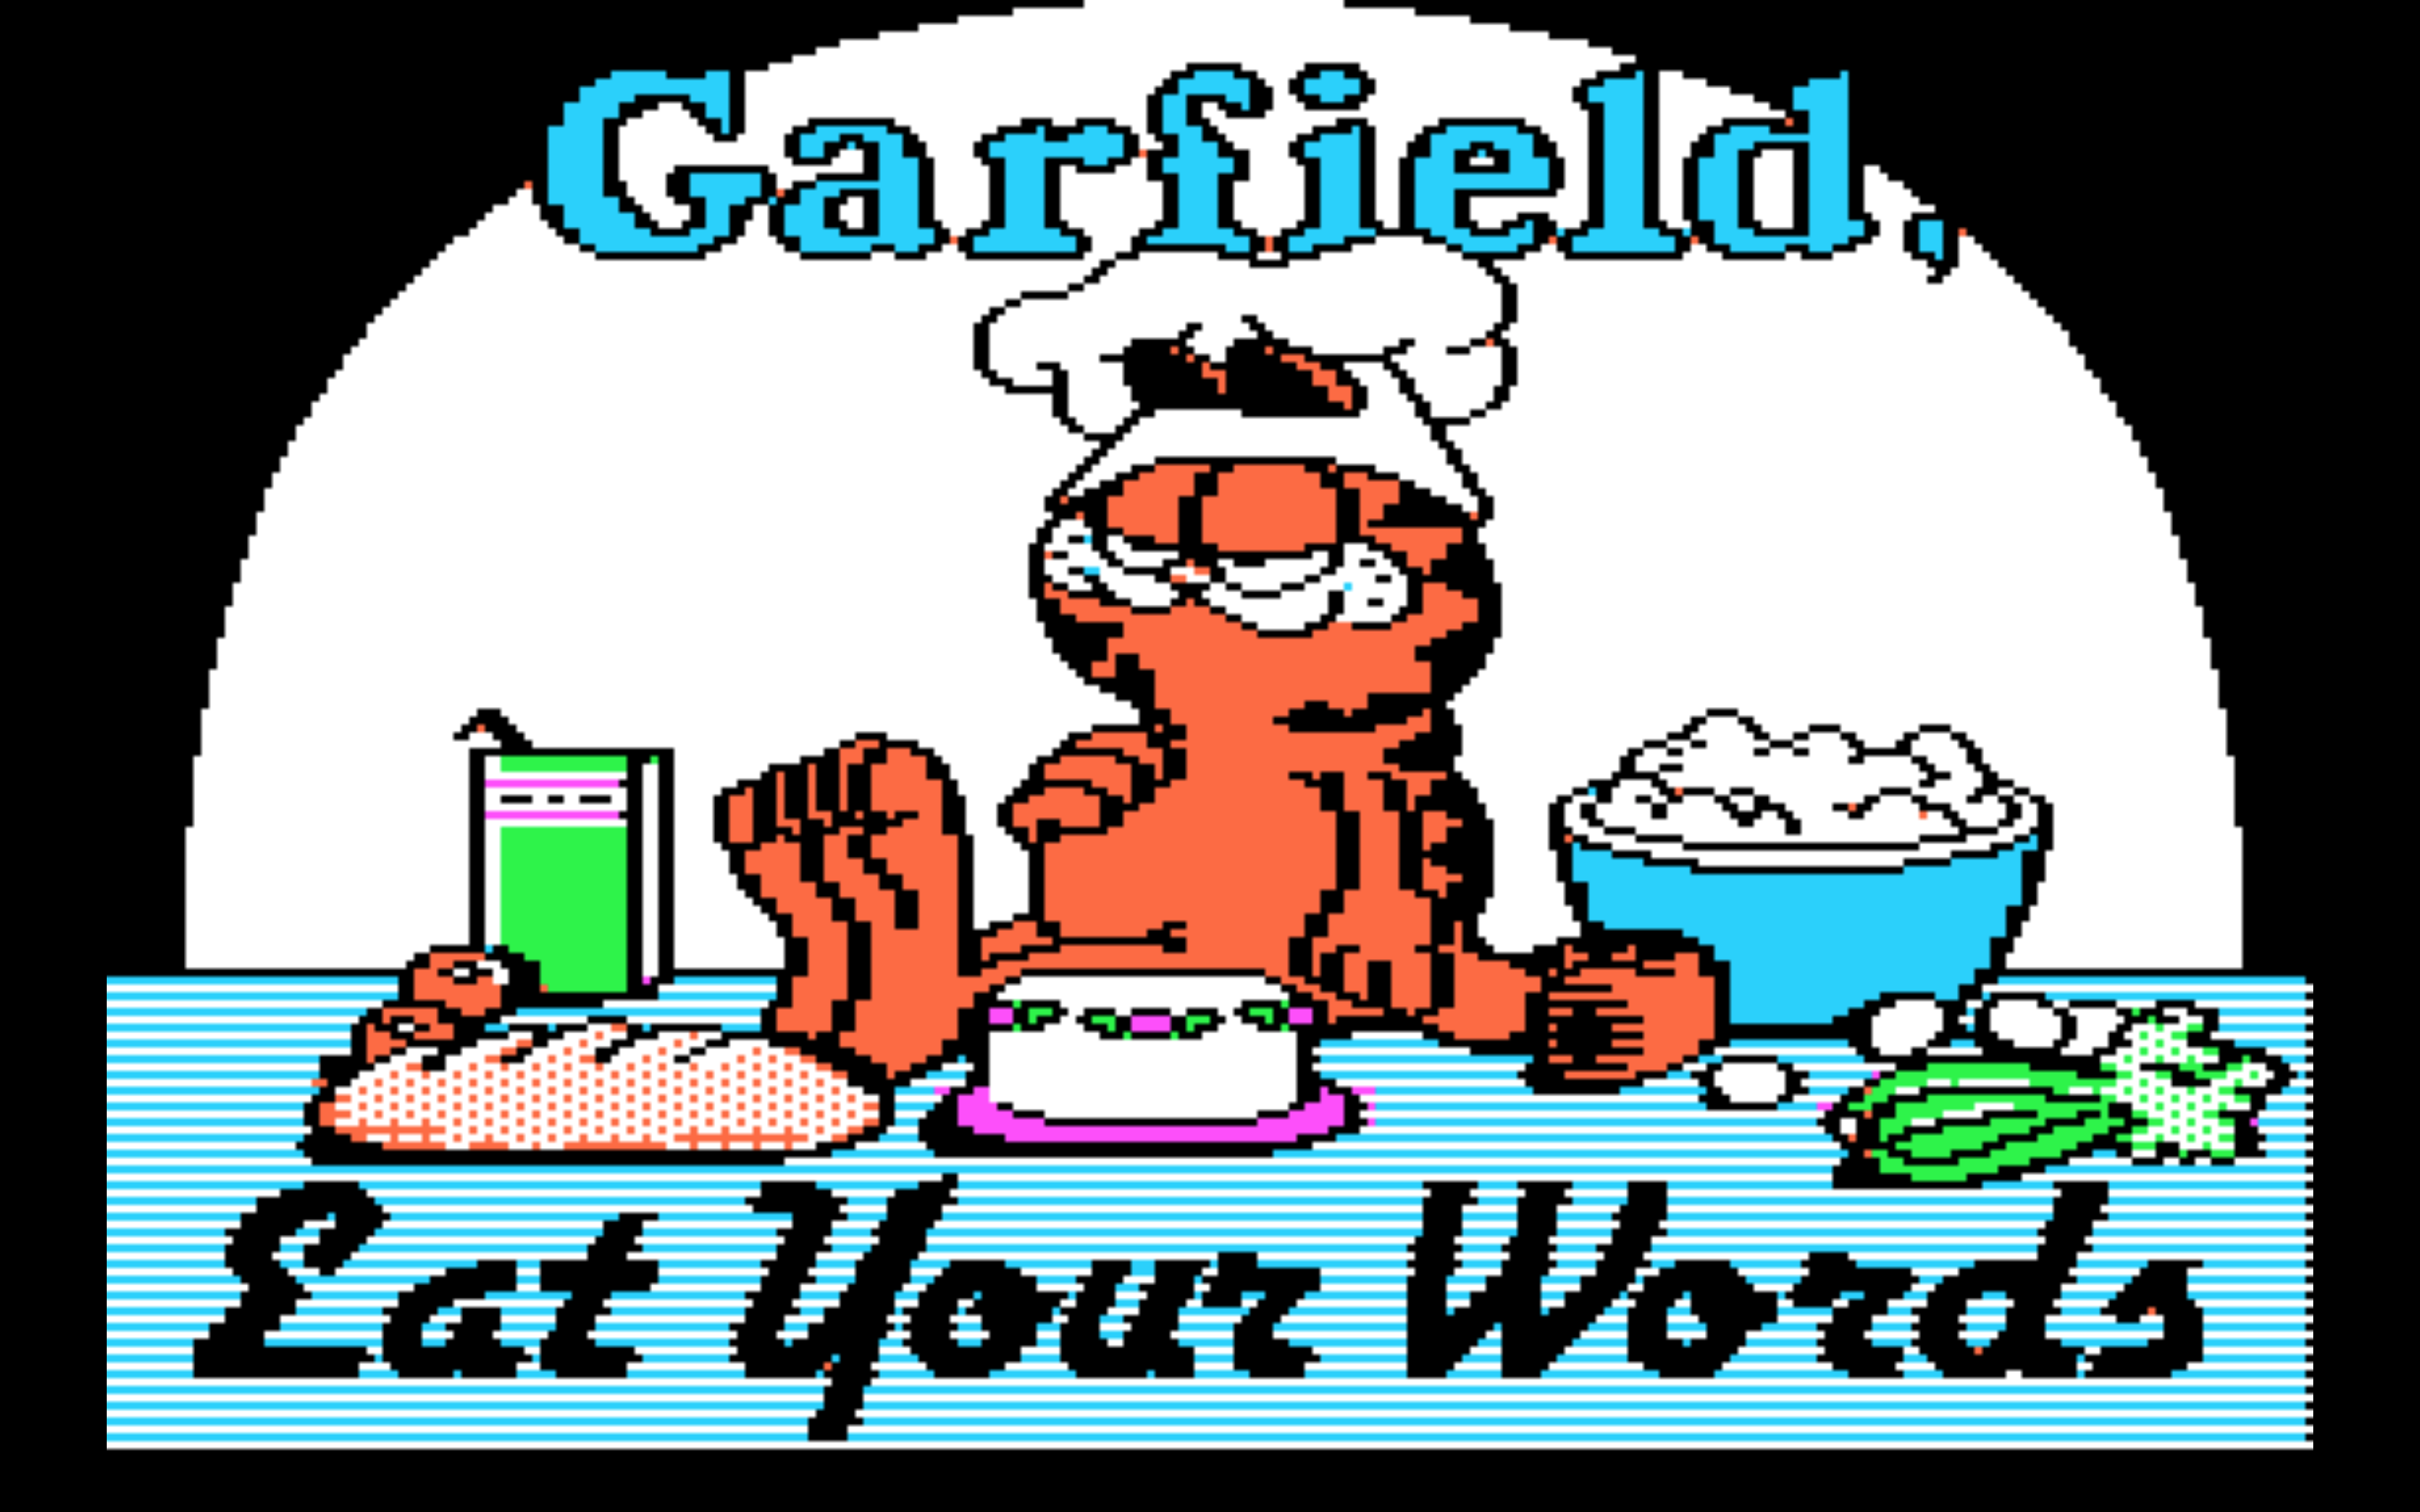 garfield eating